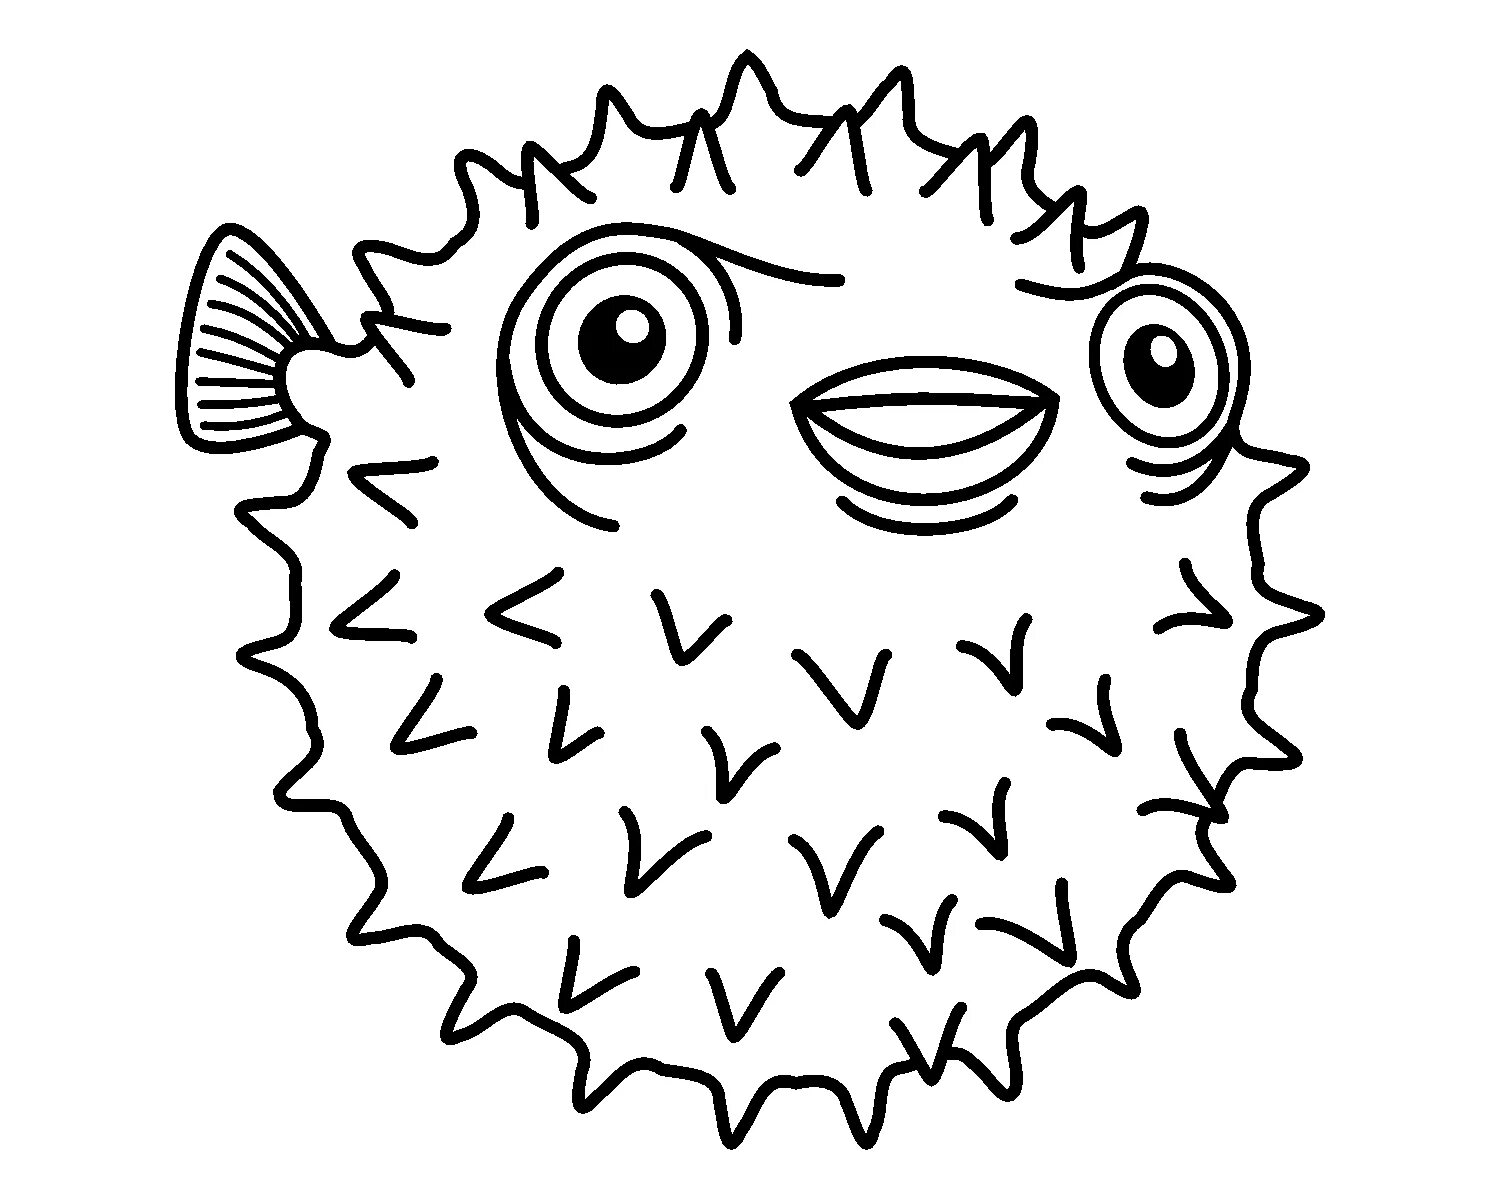 Amazing hedgehog fish coloring book